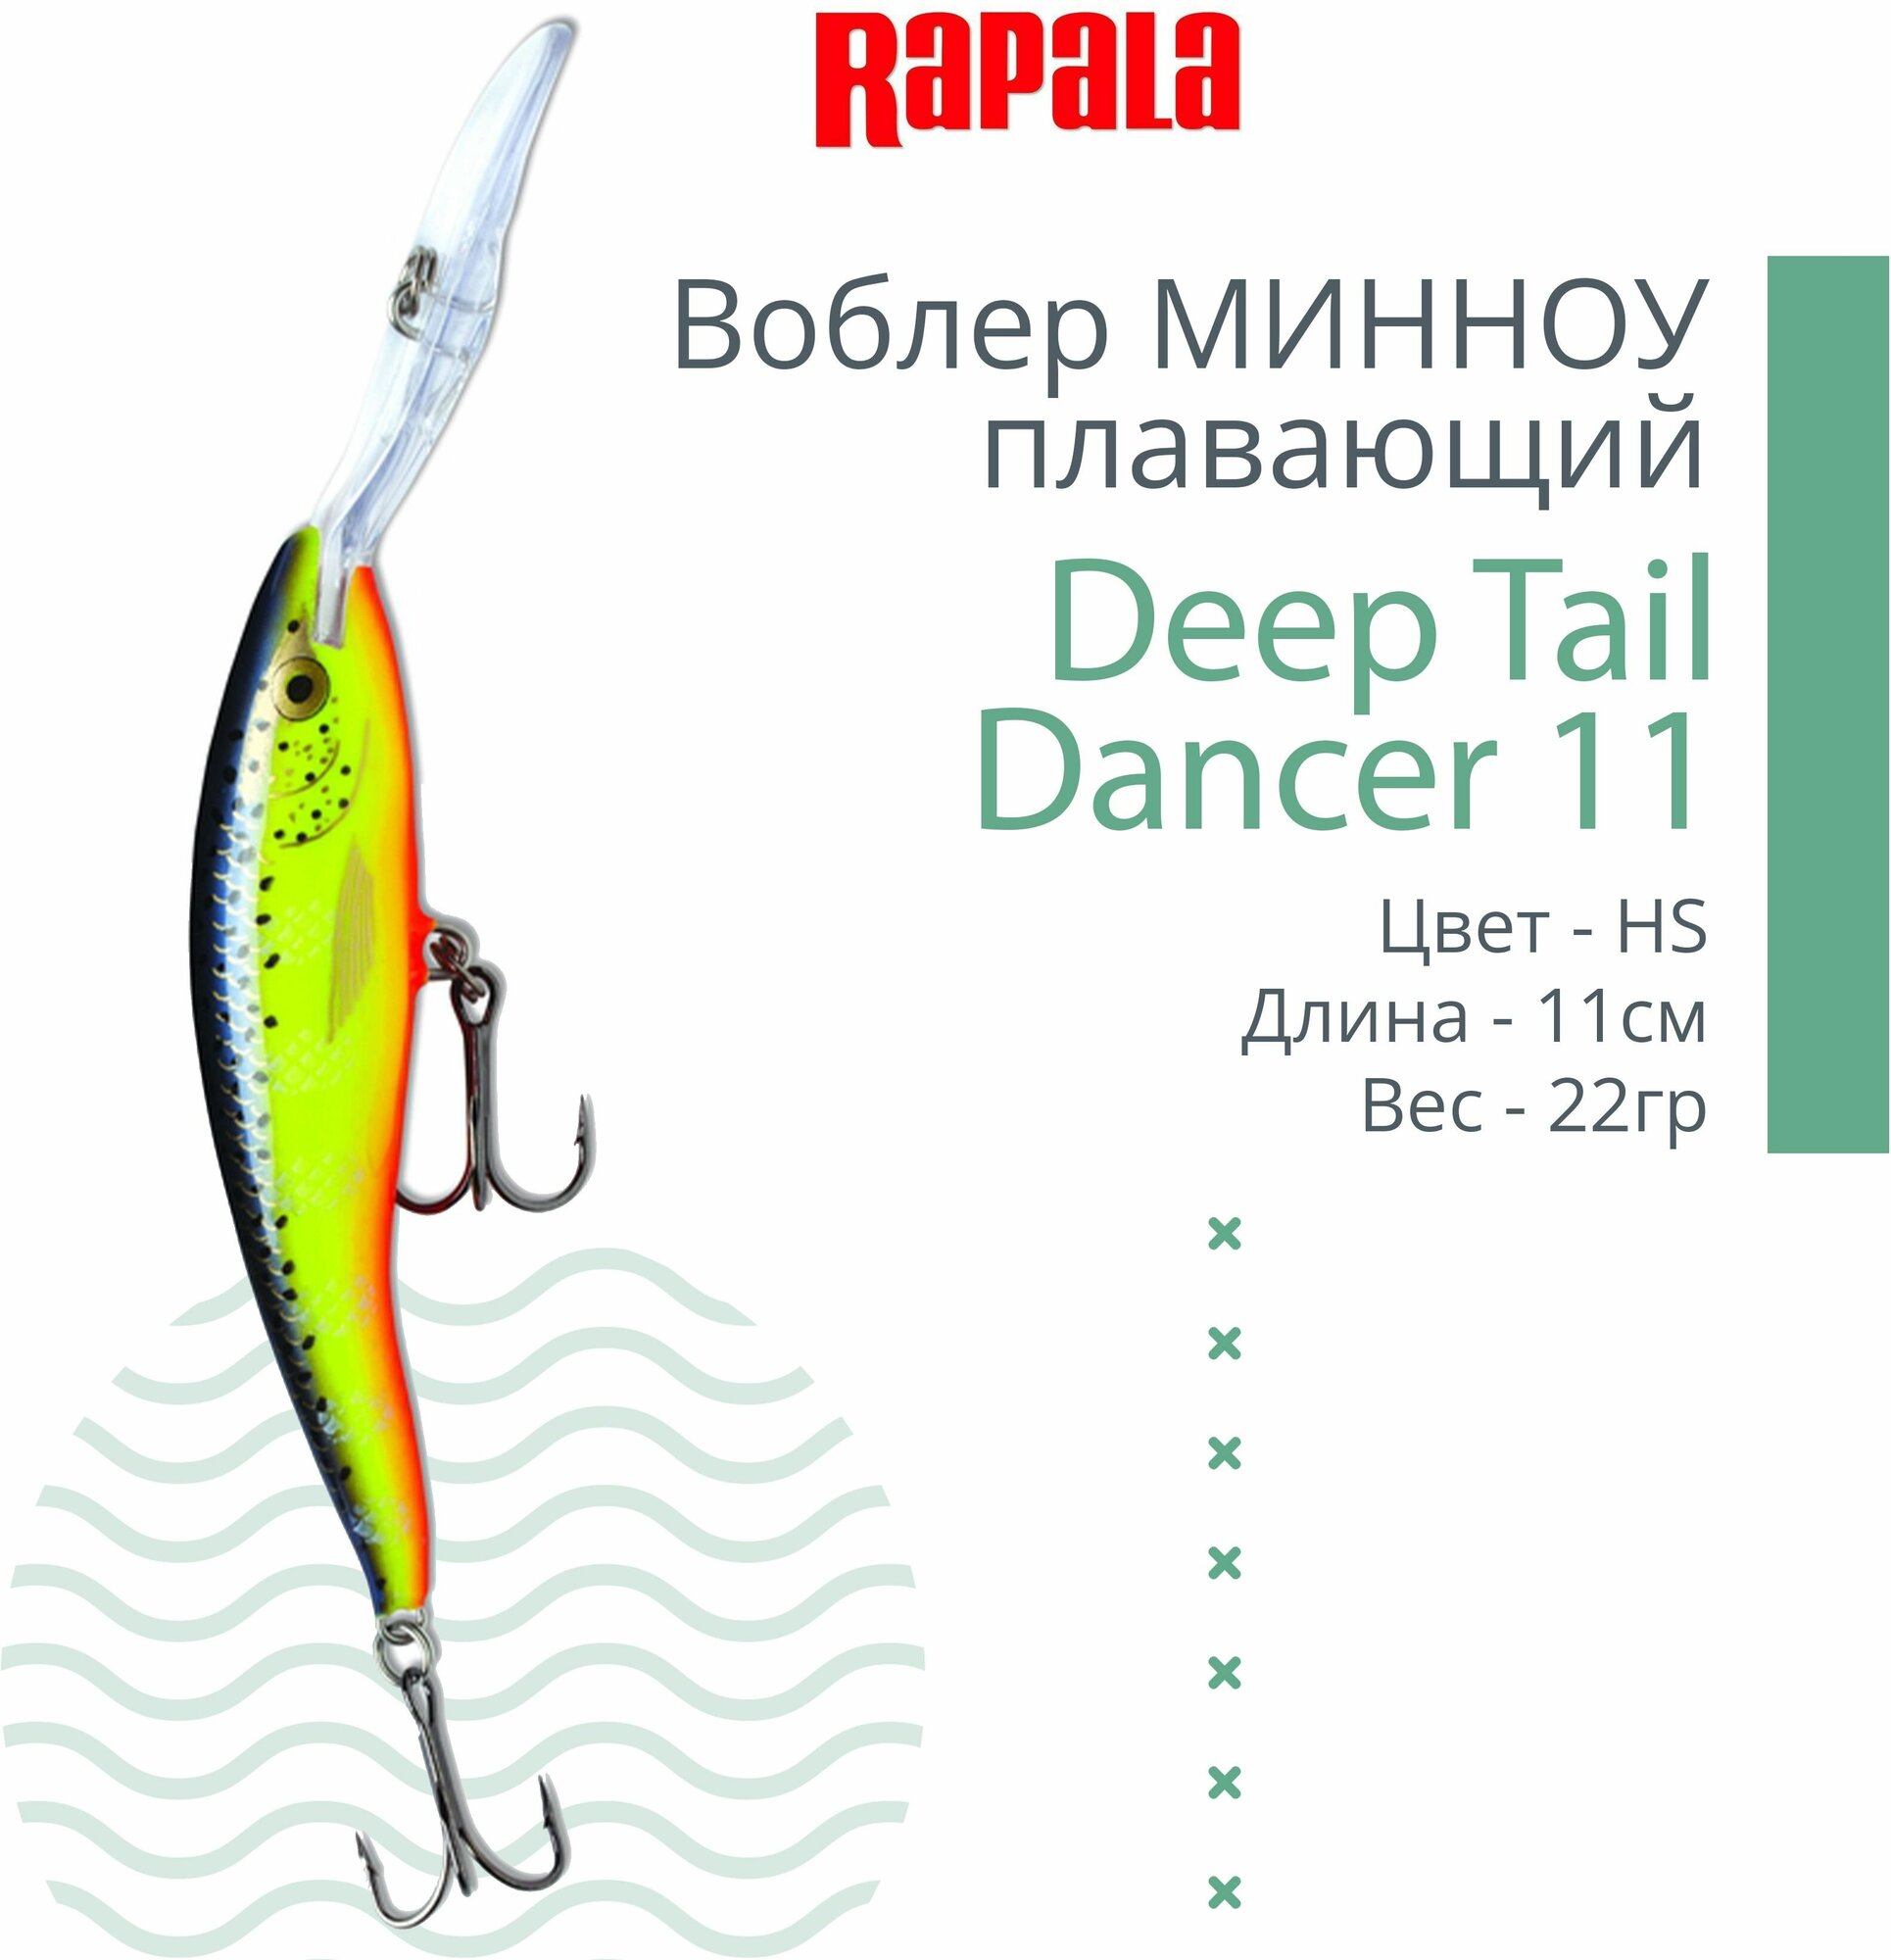 Воблер для рыбалки RAPALA Deep Tail Dancer 11, 11см, 22гр, цвет HS, плавающий